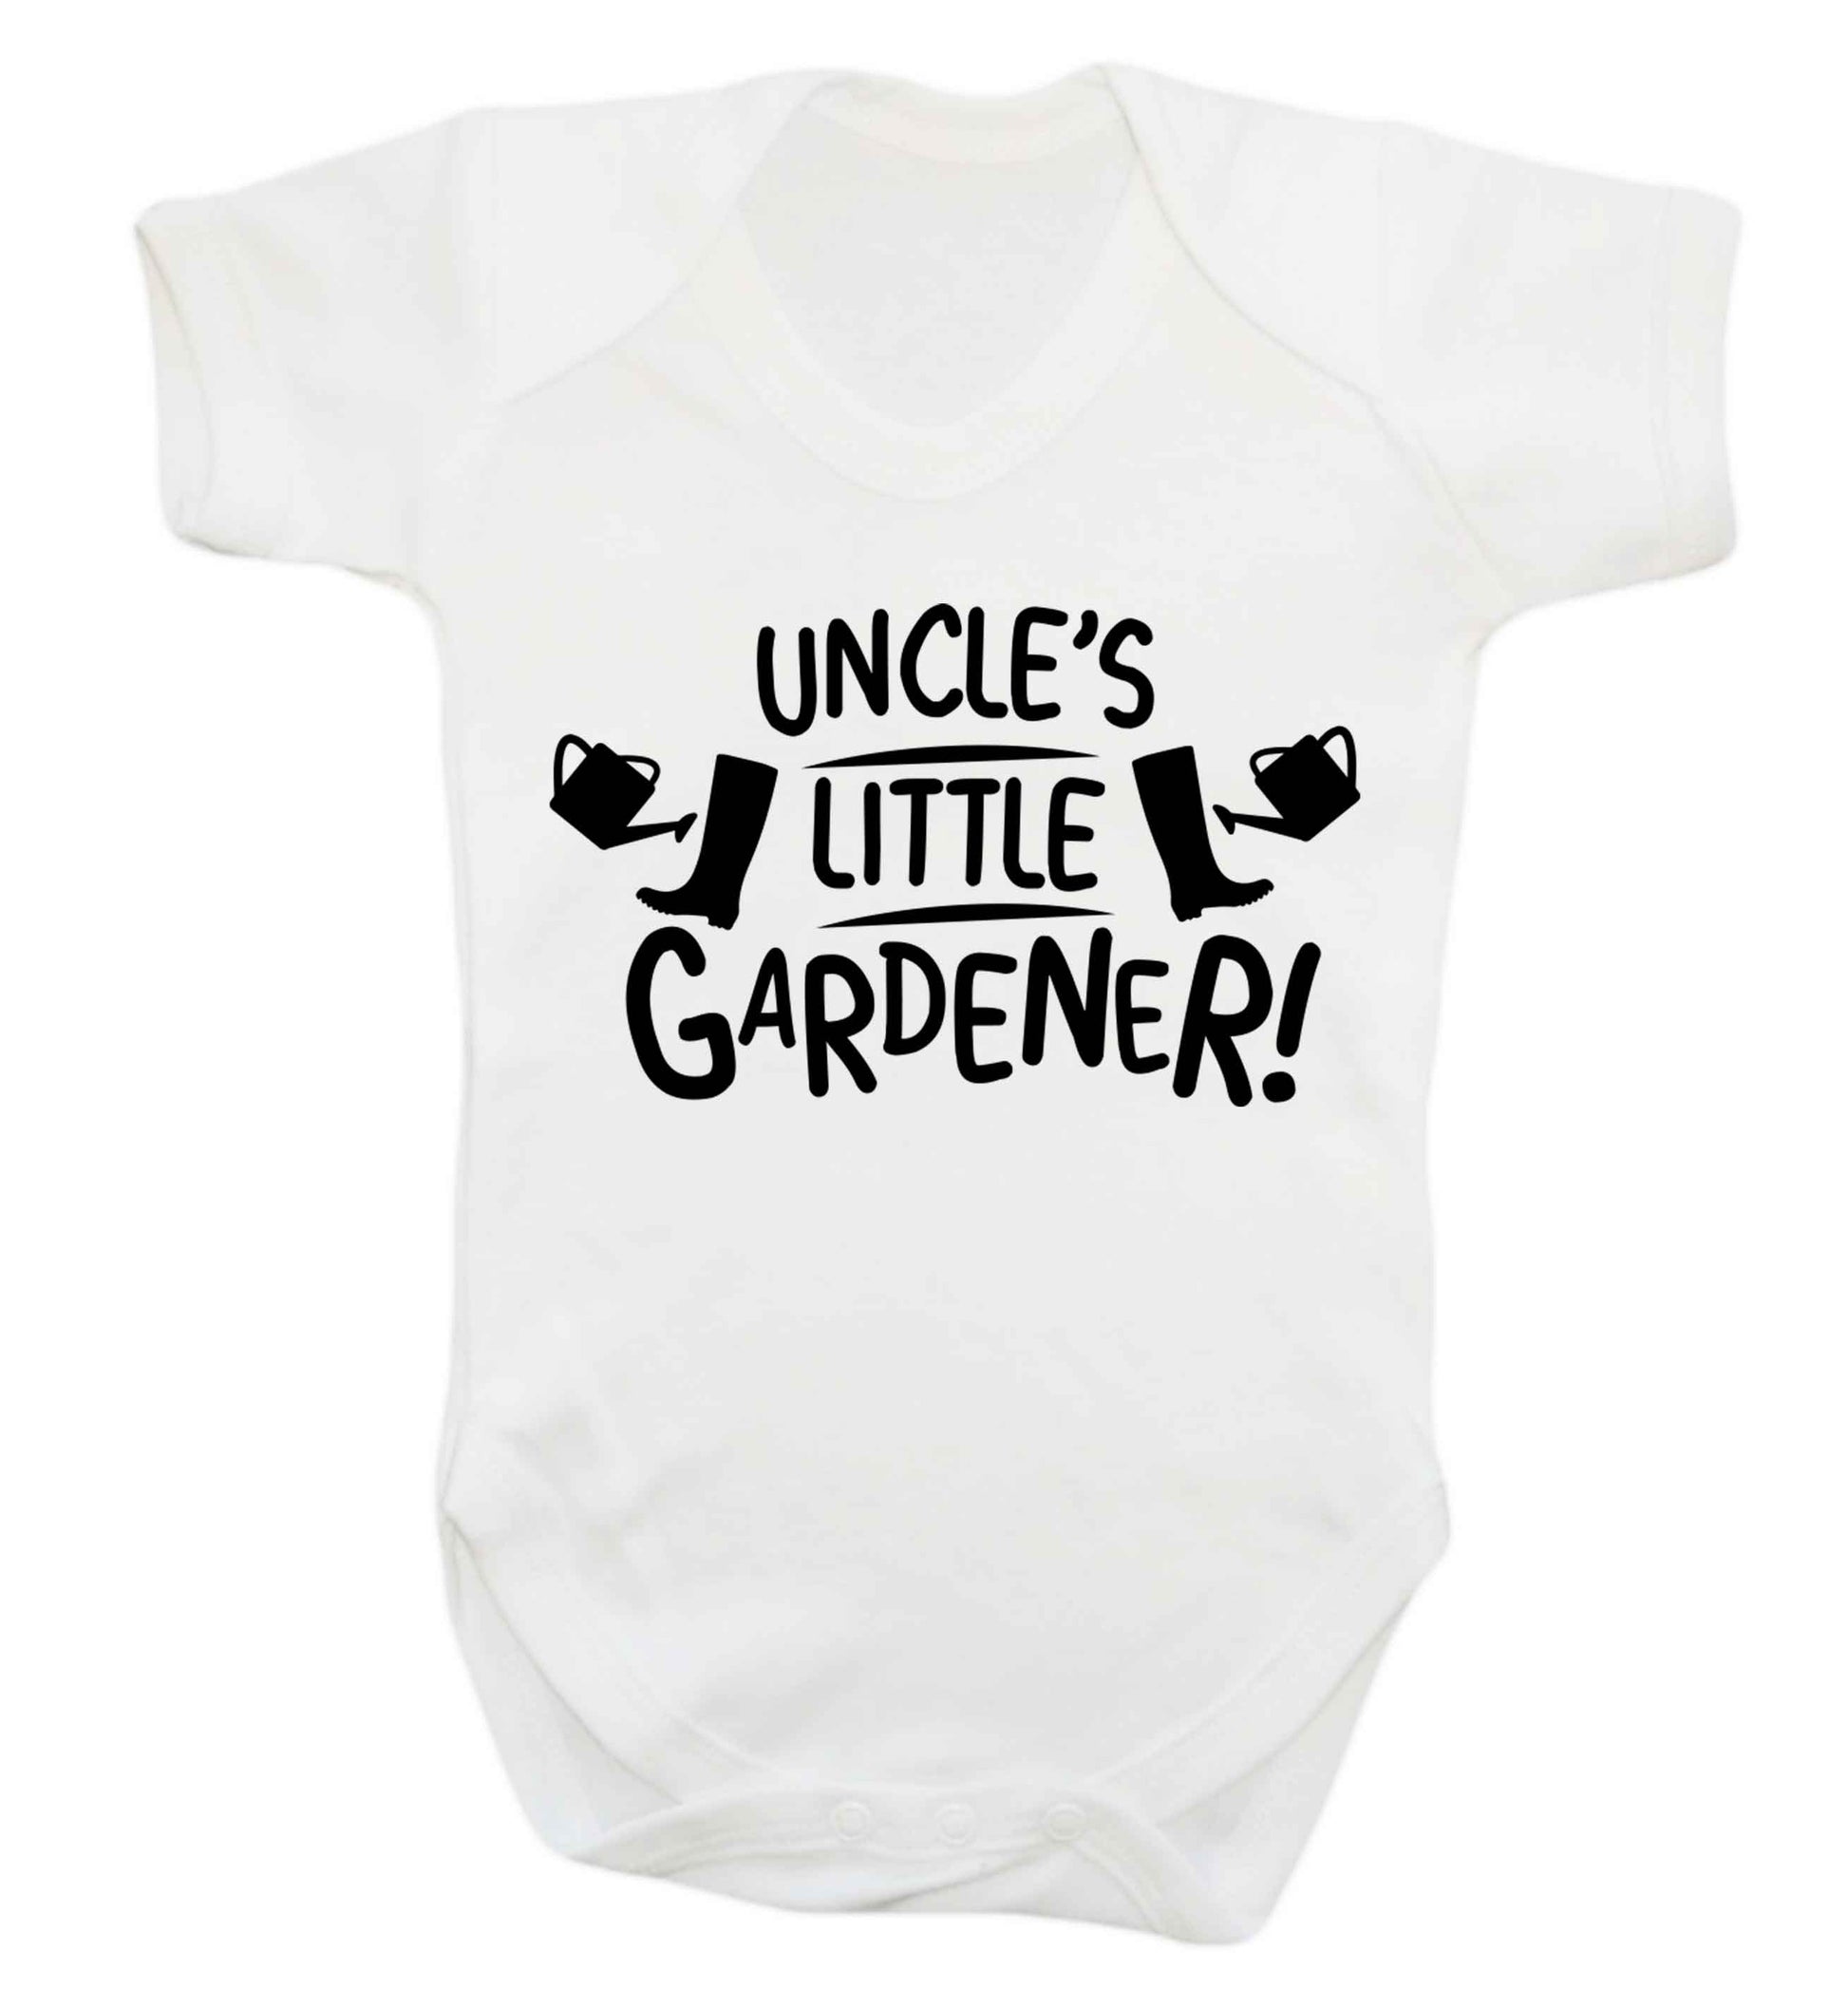 Uncle's little gardener Baby Vest white 18-24 months